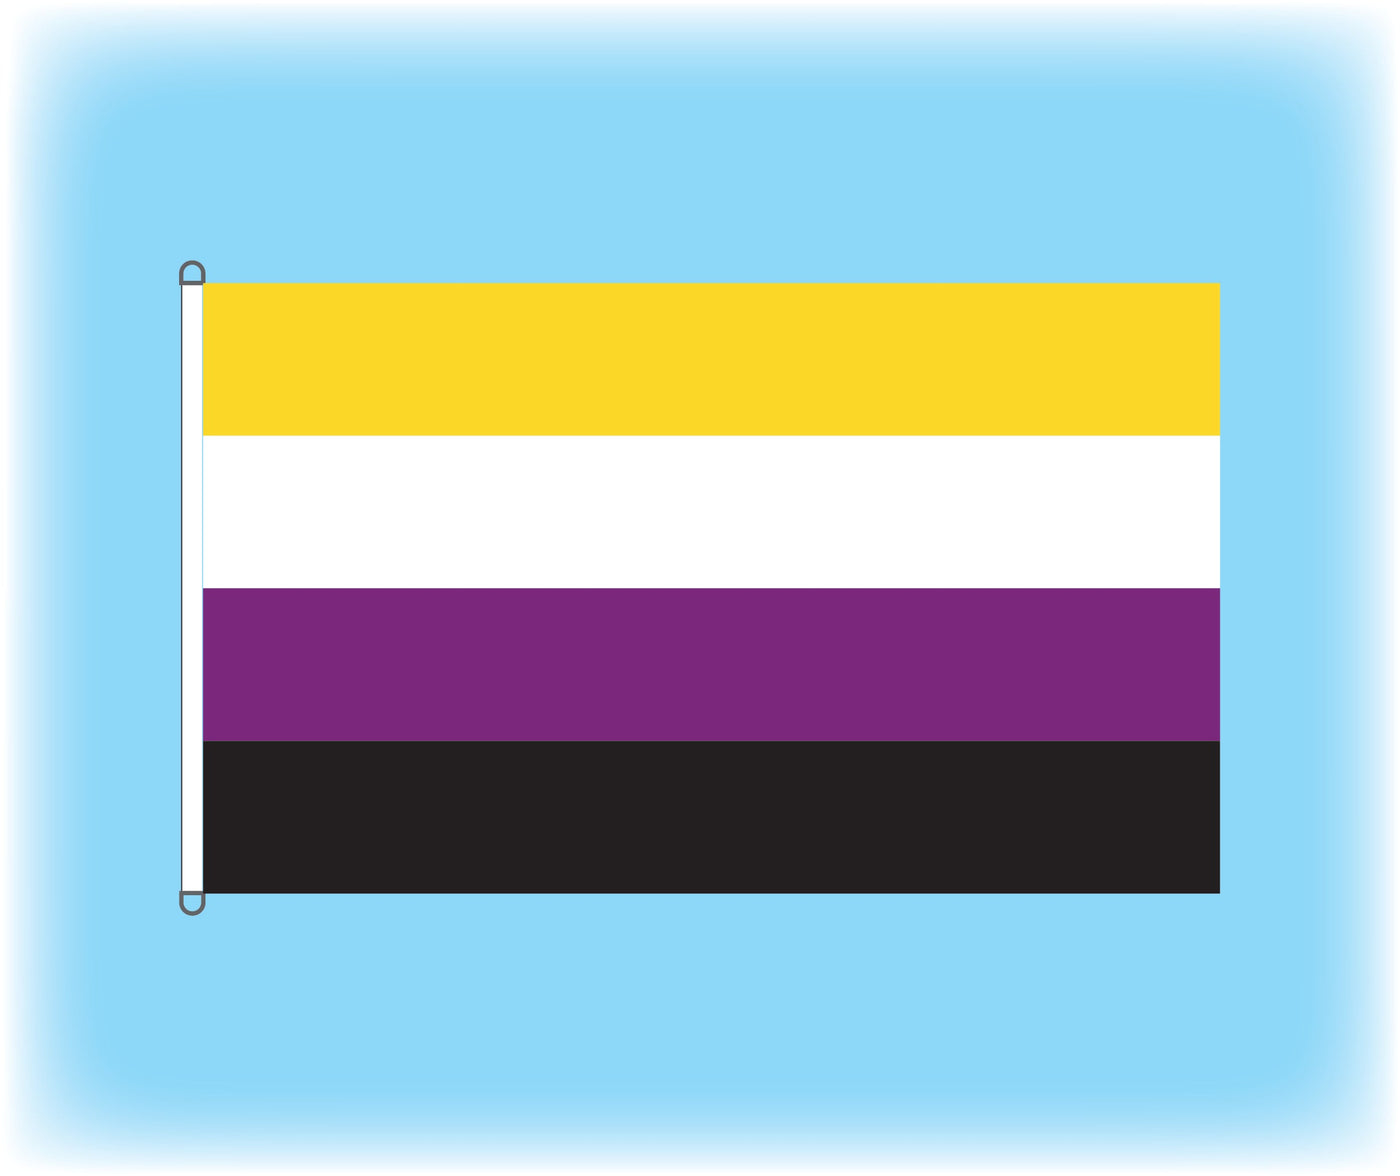 Progress Pride Flag (LGBTQ+ Pride) | Flags and Flagpoles